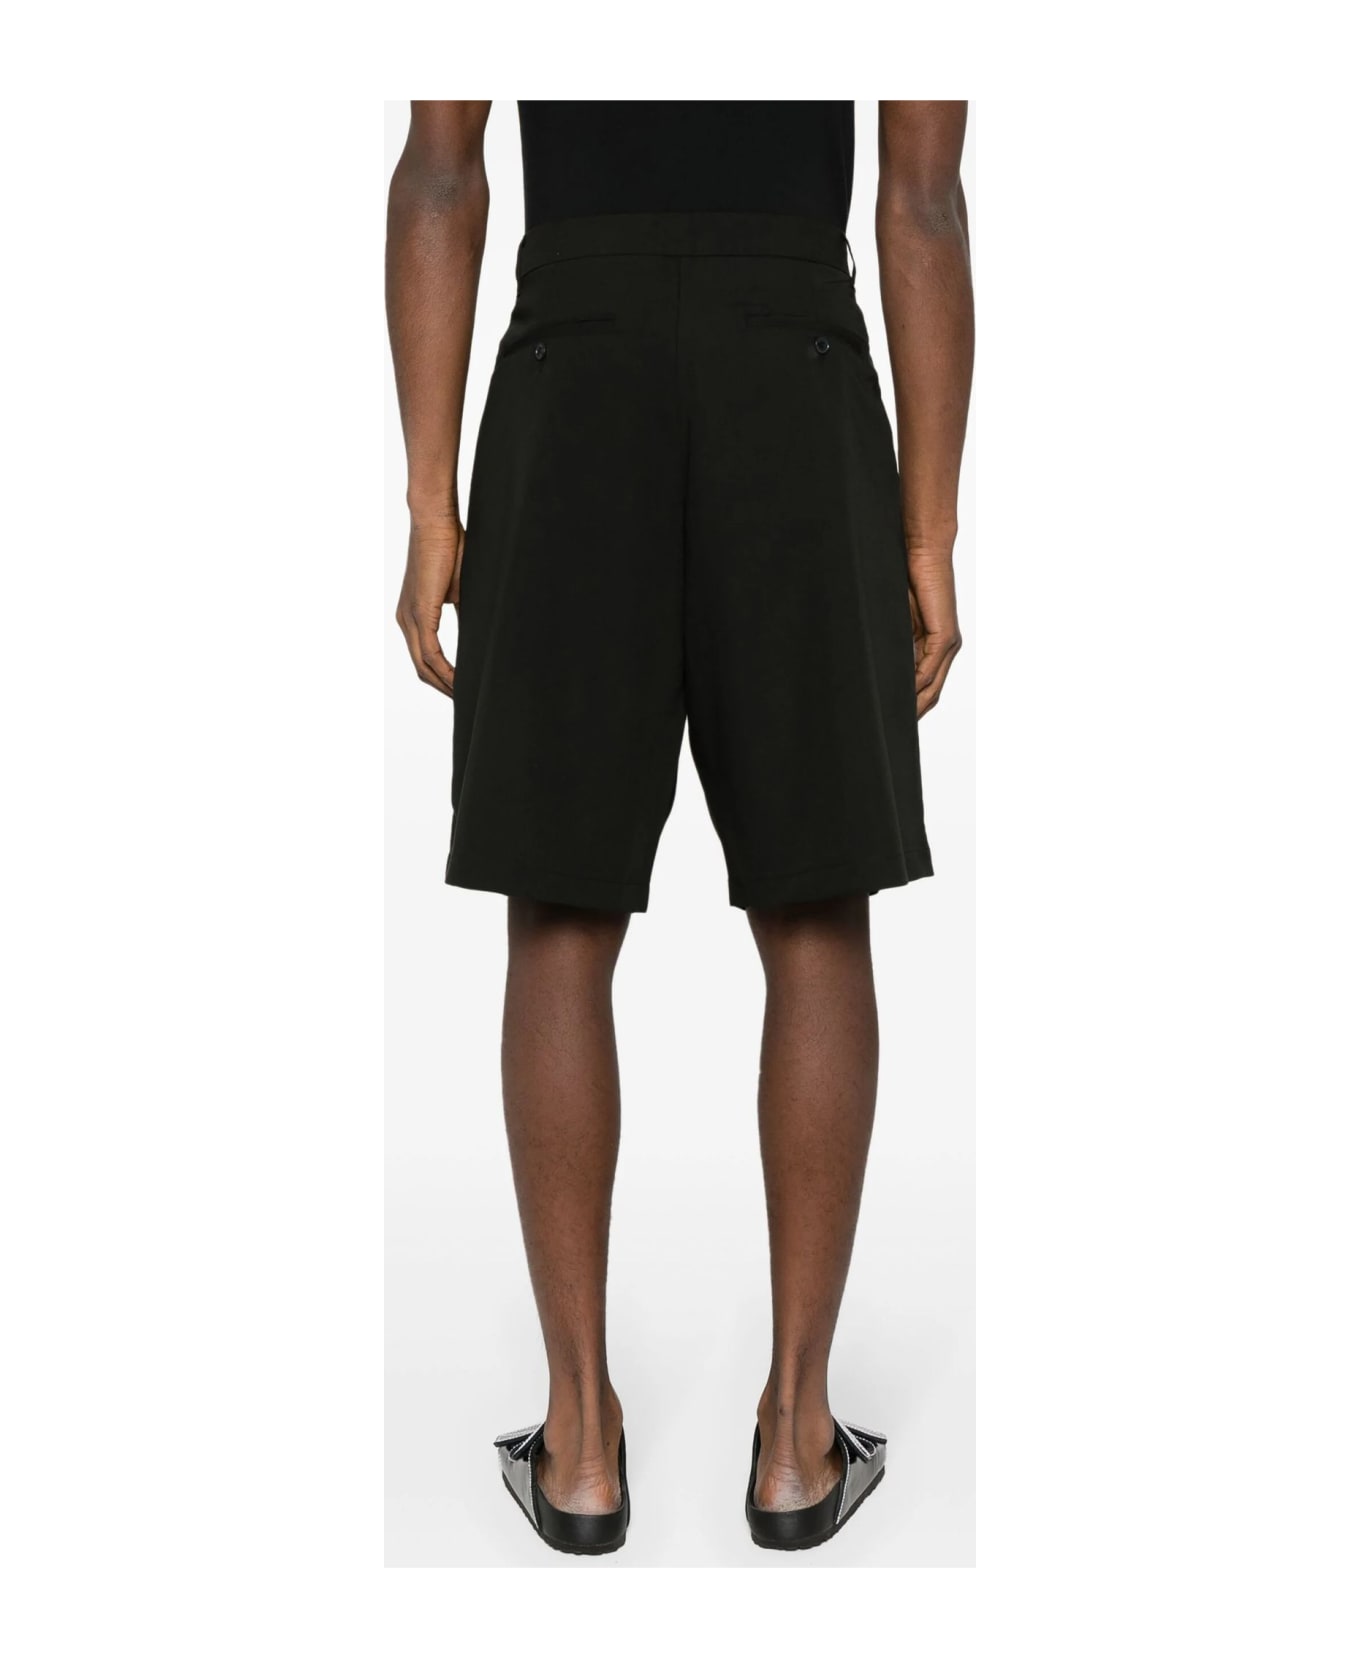 Family First Milano Black Tailored Knee Shorts - BLACK ショートパンツ